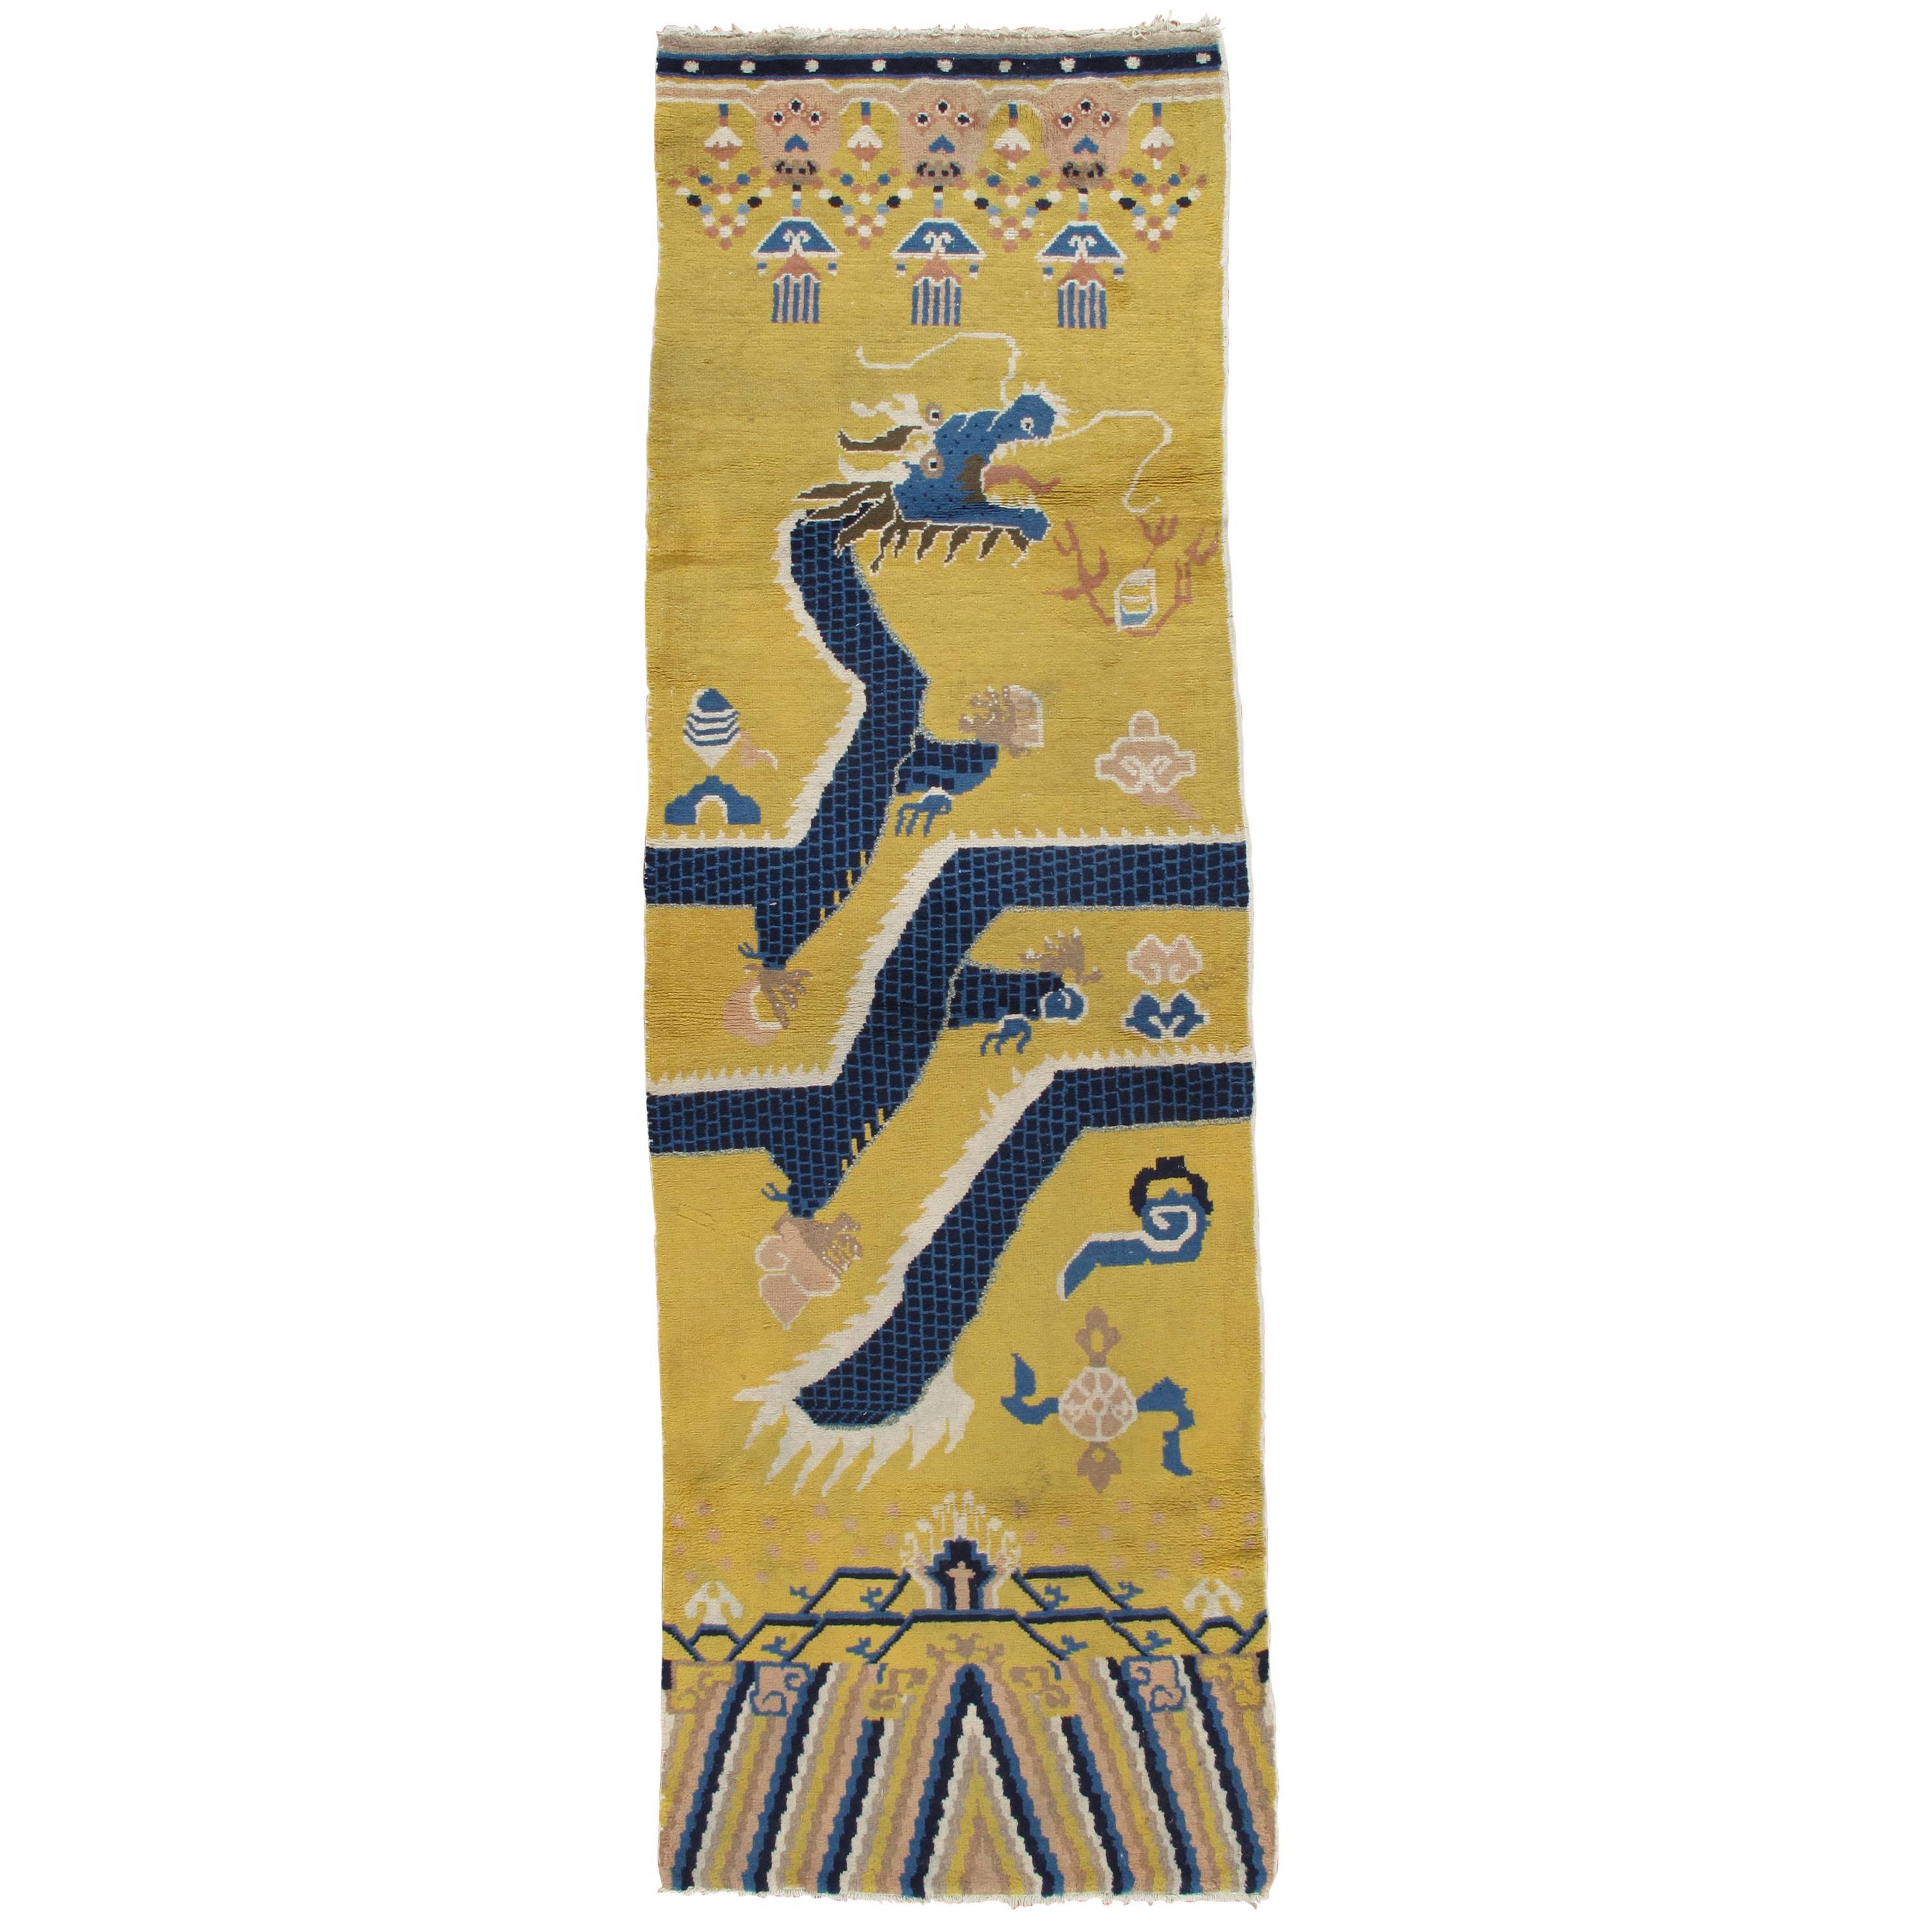 Antique Chinese Runner, Yellow and Blue Runner, Handmade Wool Rug